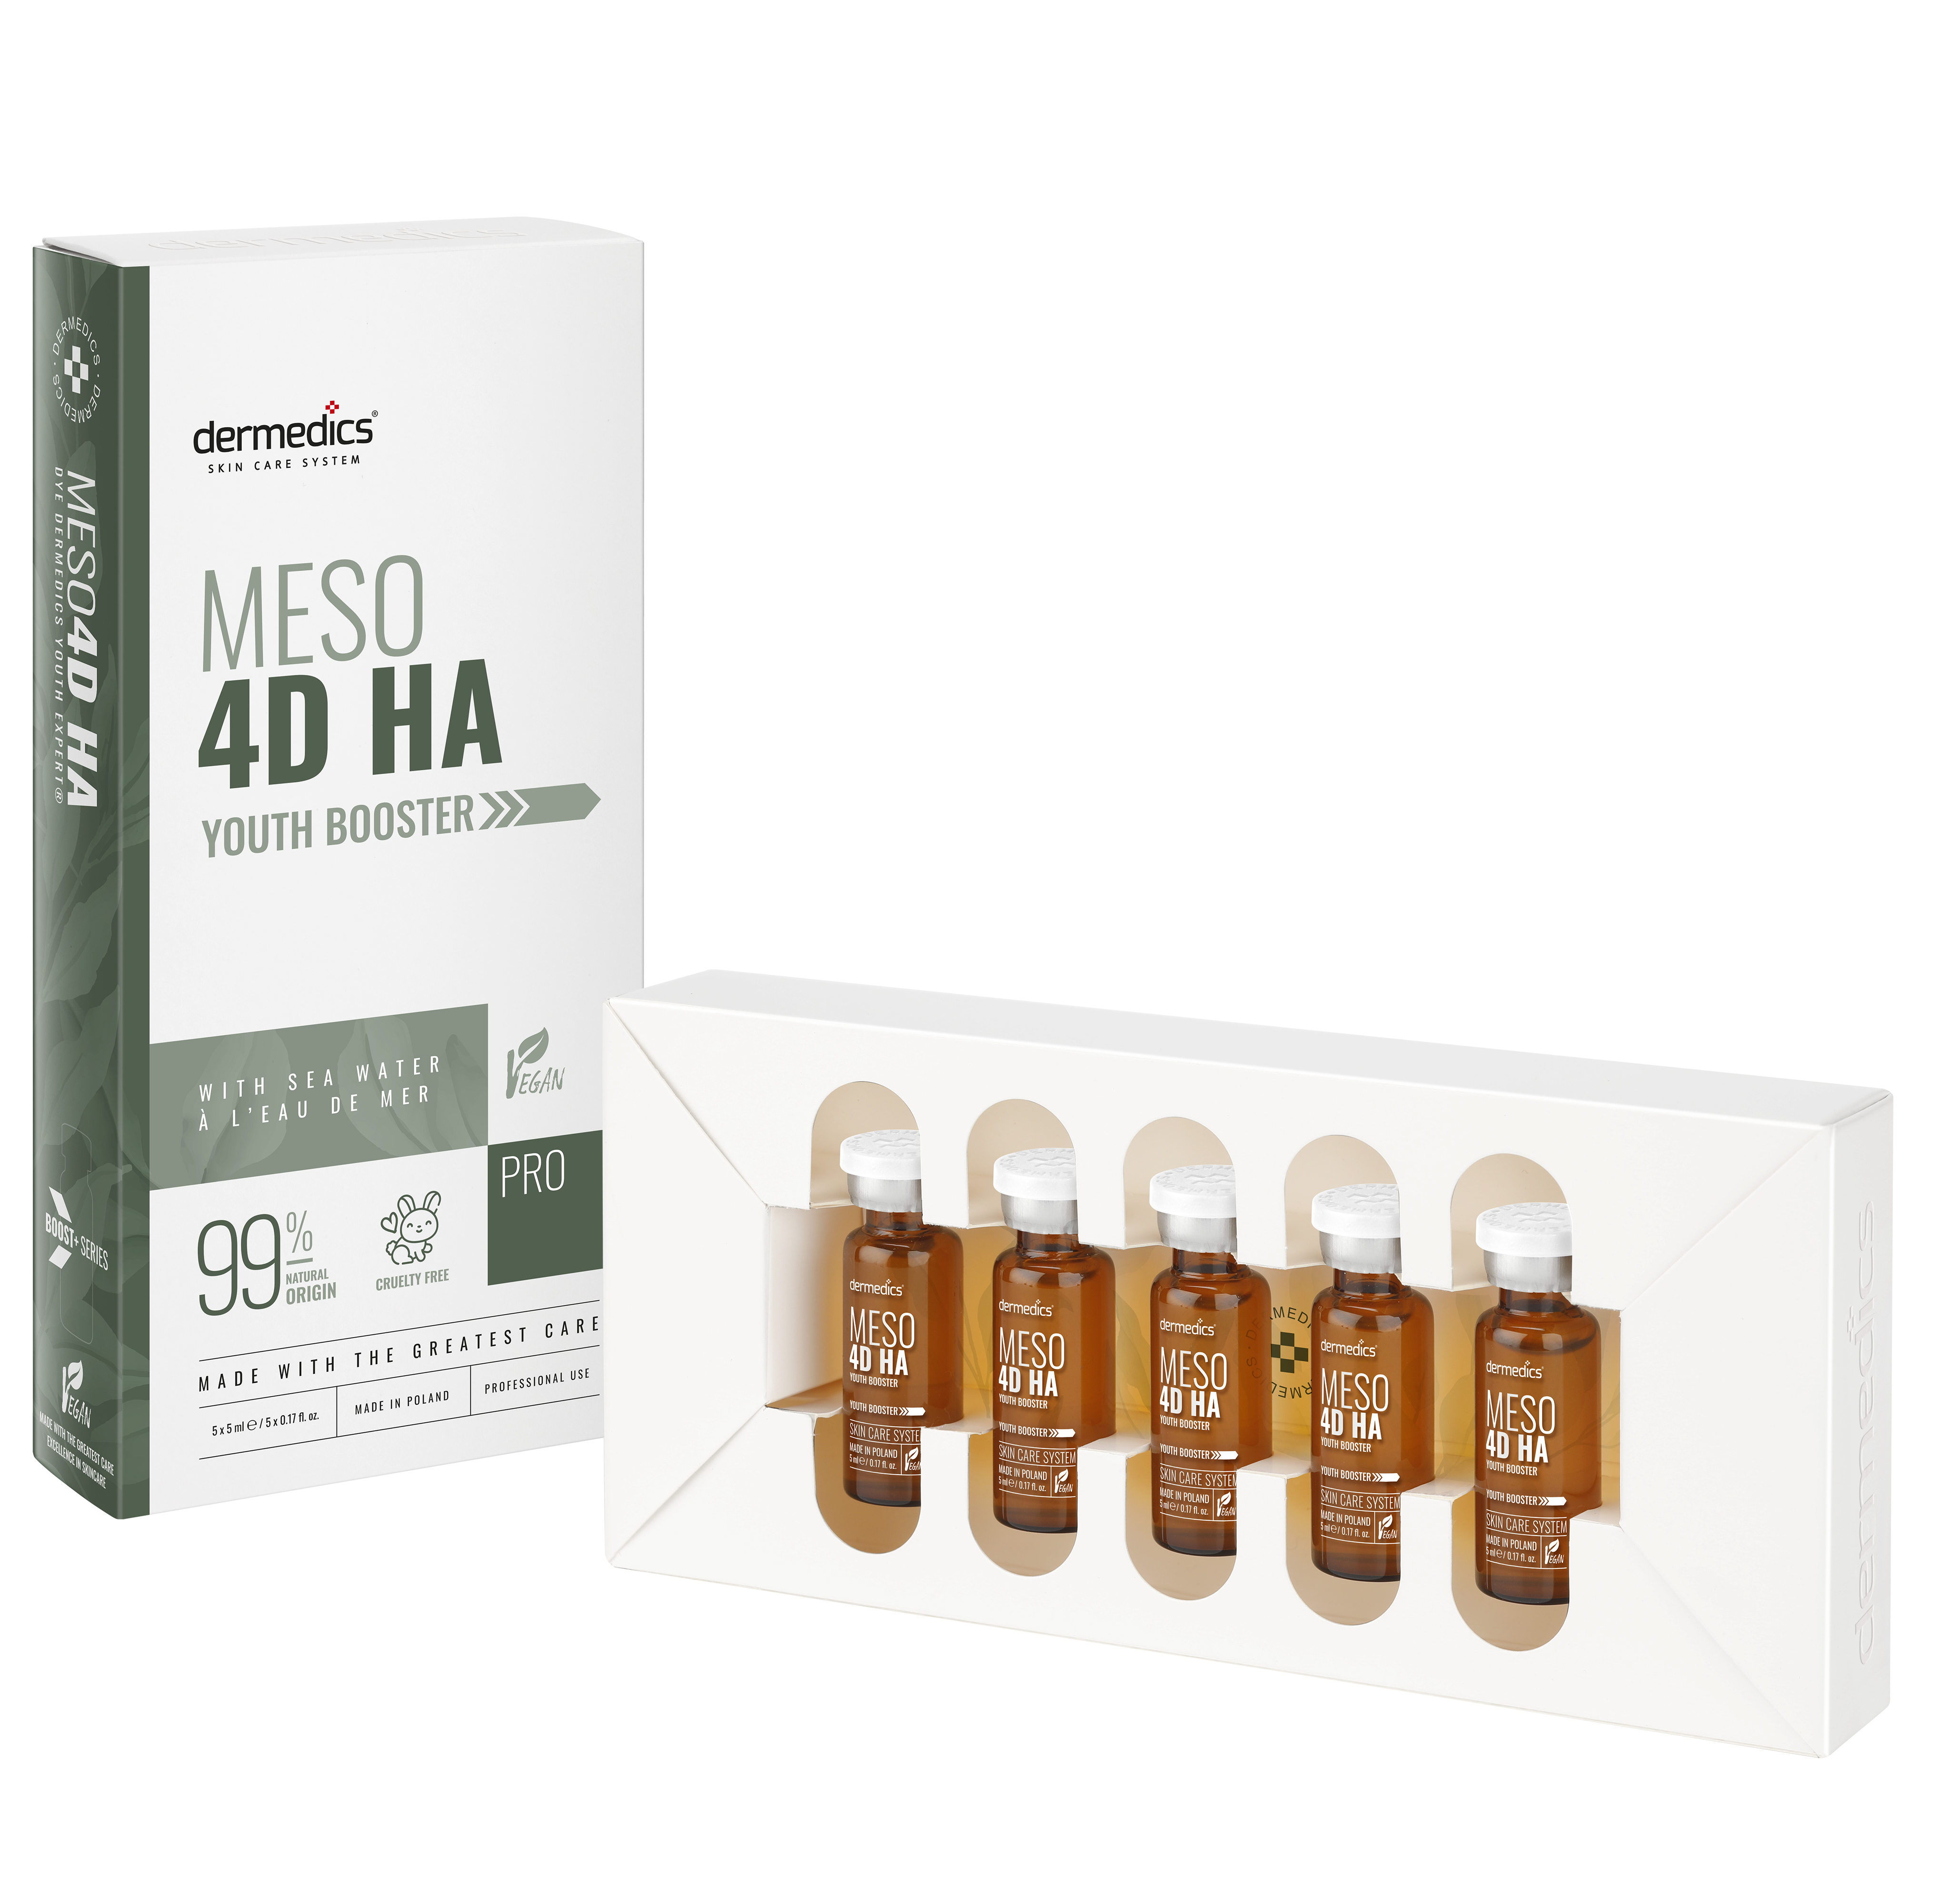 DERMEDICS™ Meso Boost+ 4D HA (4-DIMENSIONAL HYALURONIC ACID)